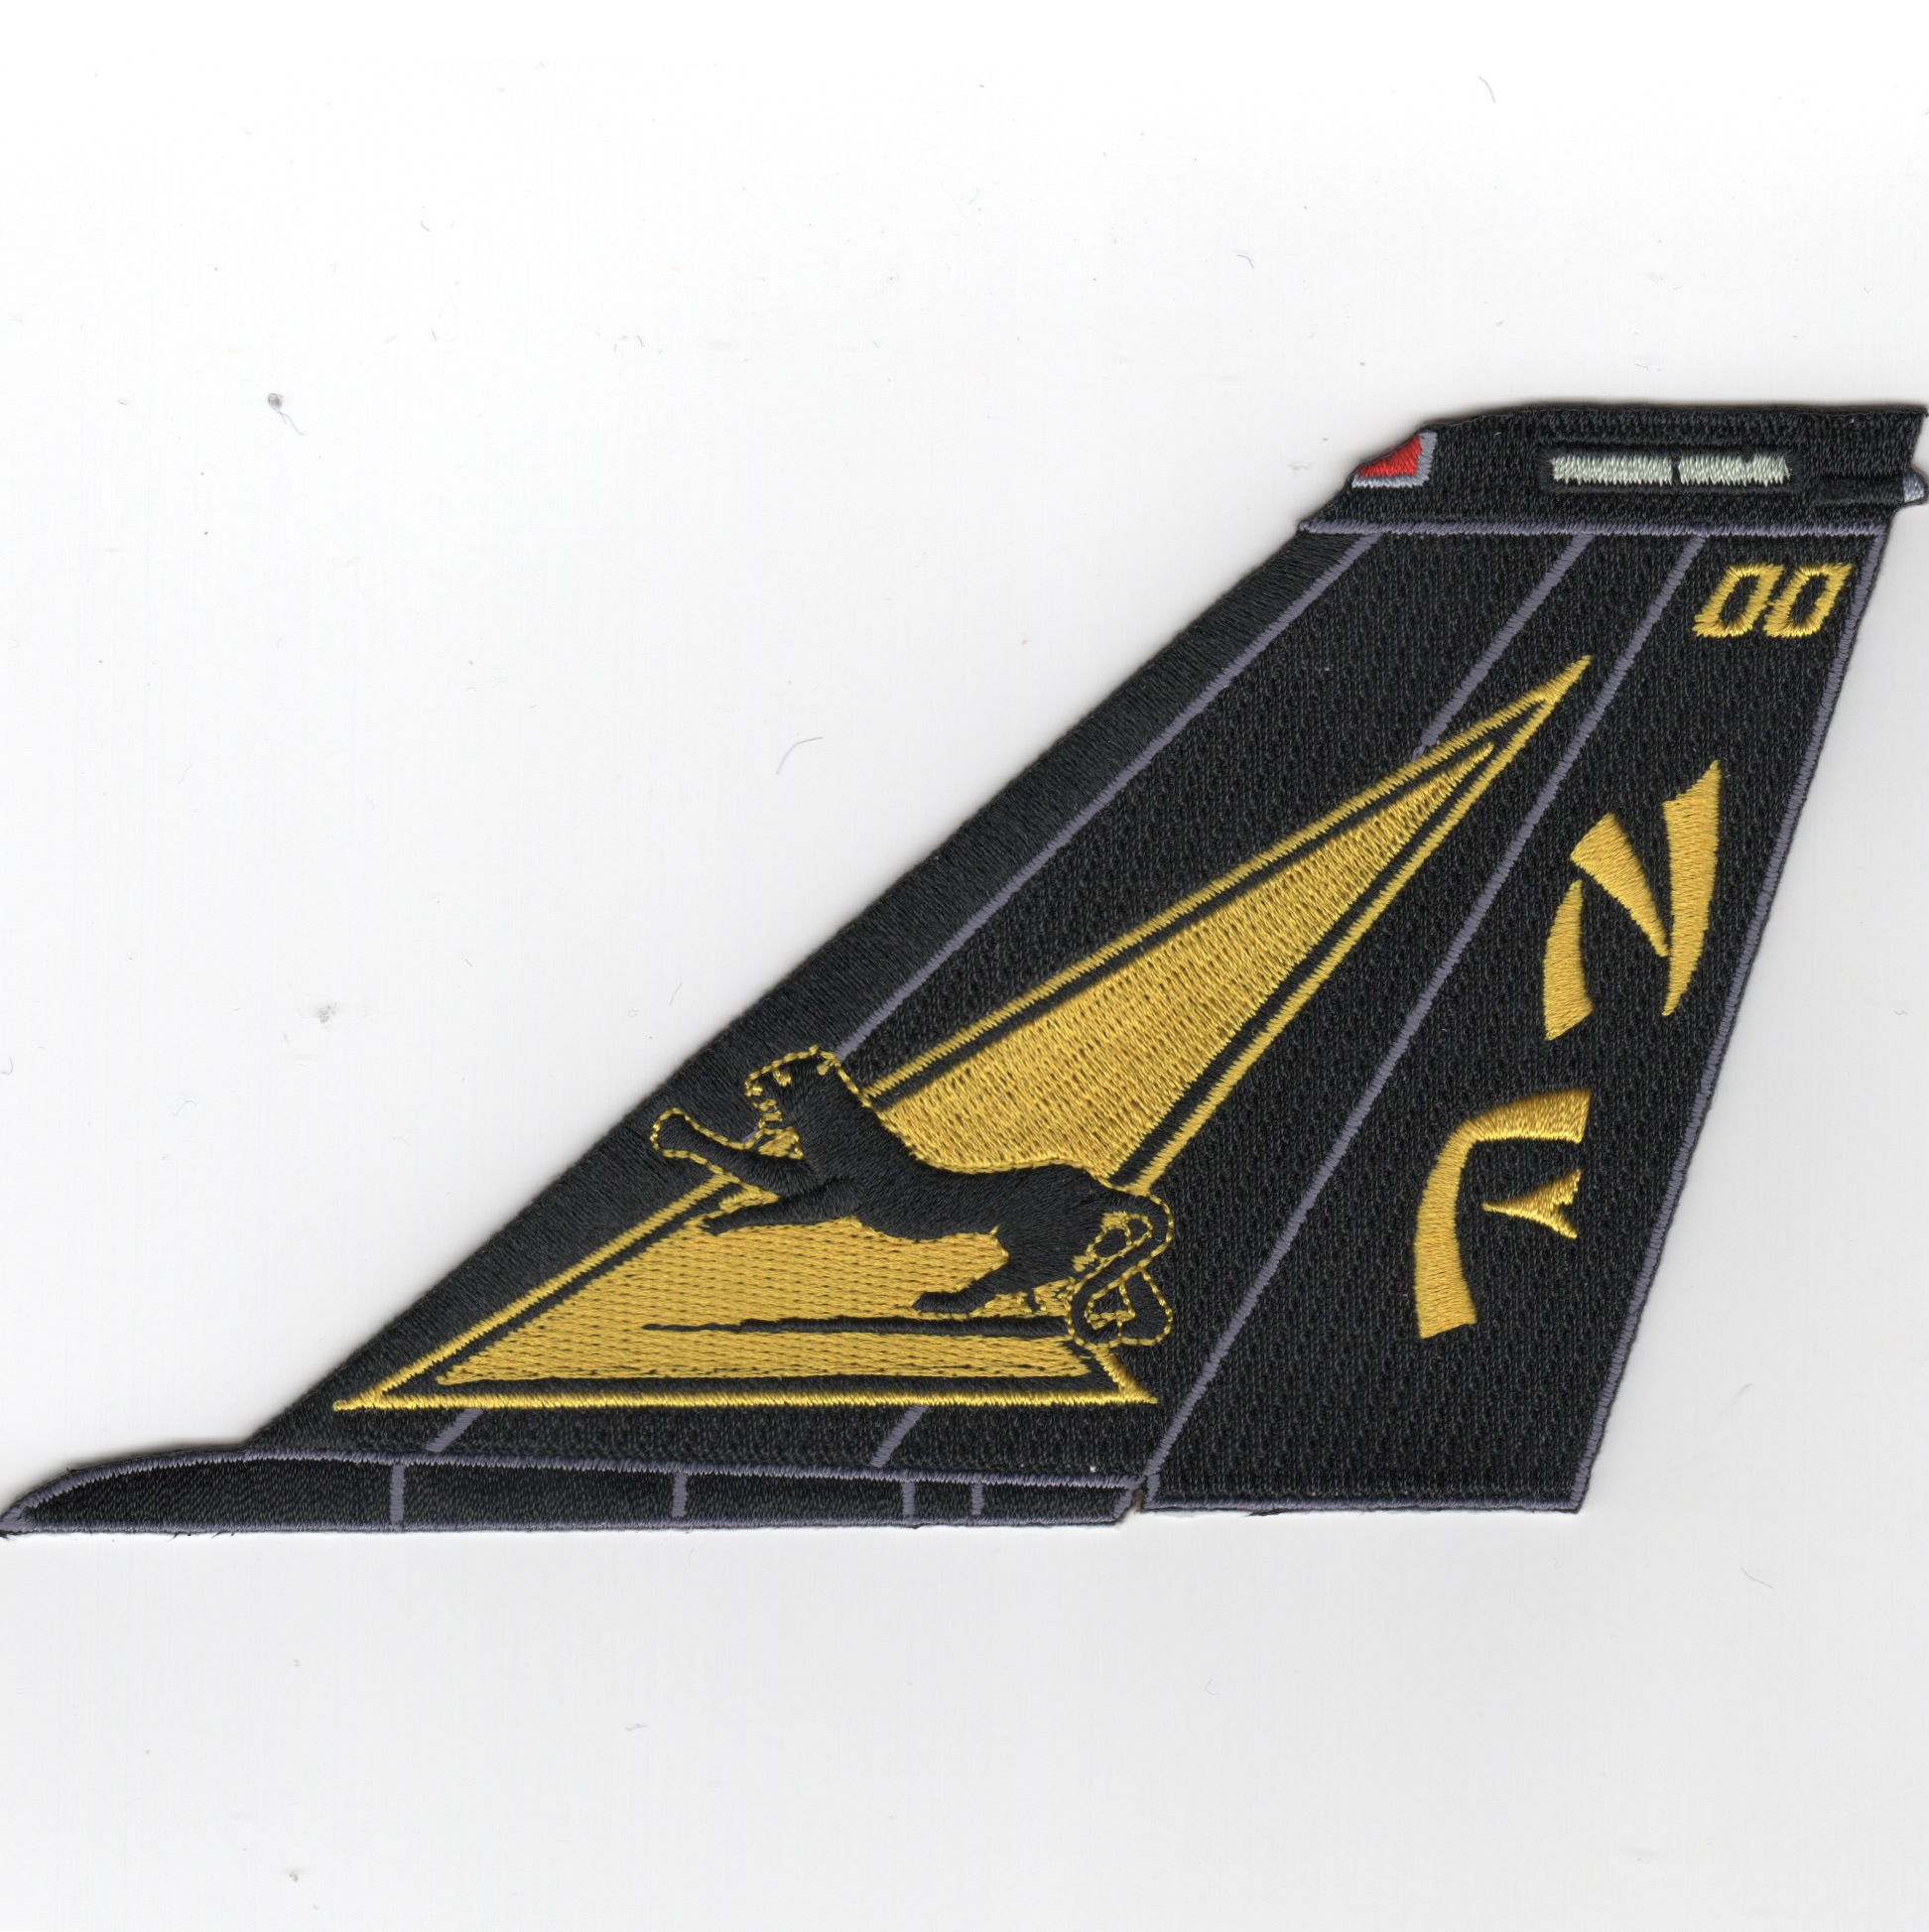 VF-21 F-14 Tomcat TailFin (No Text)